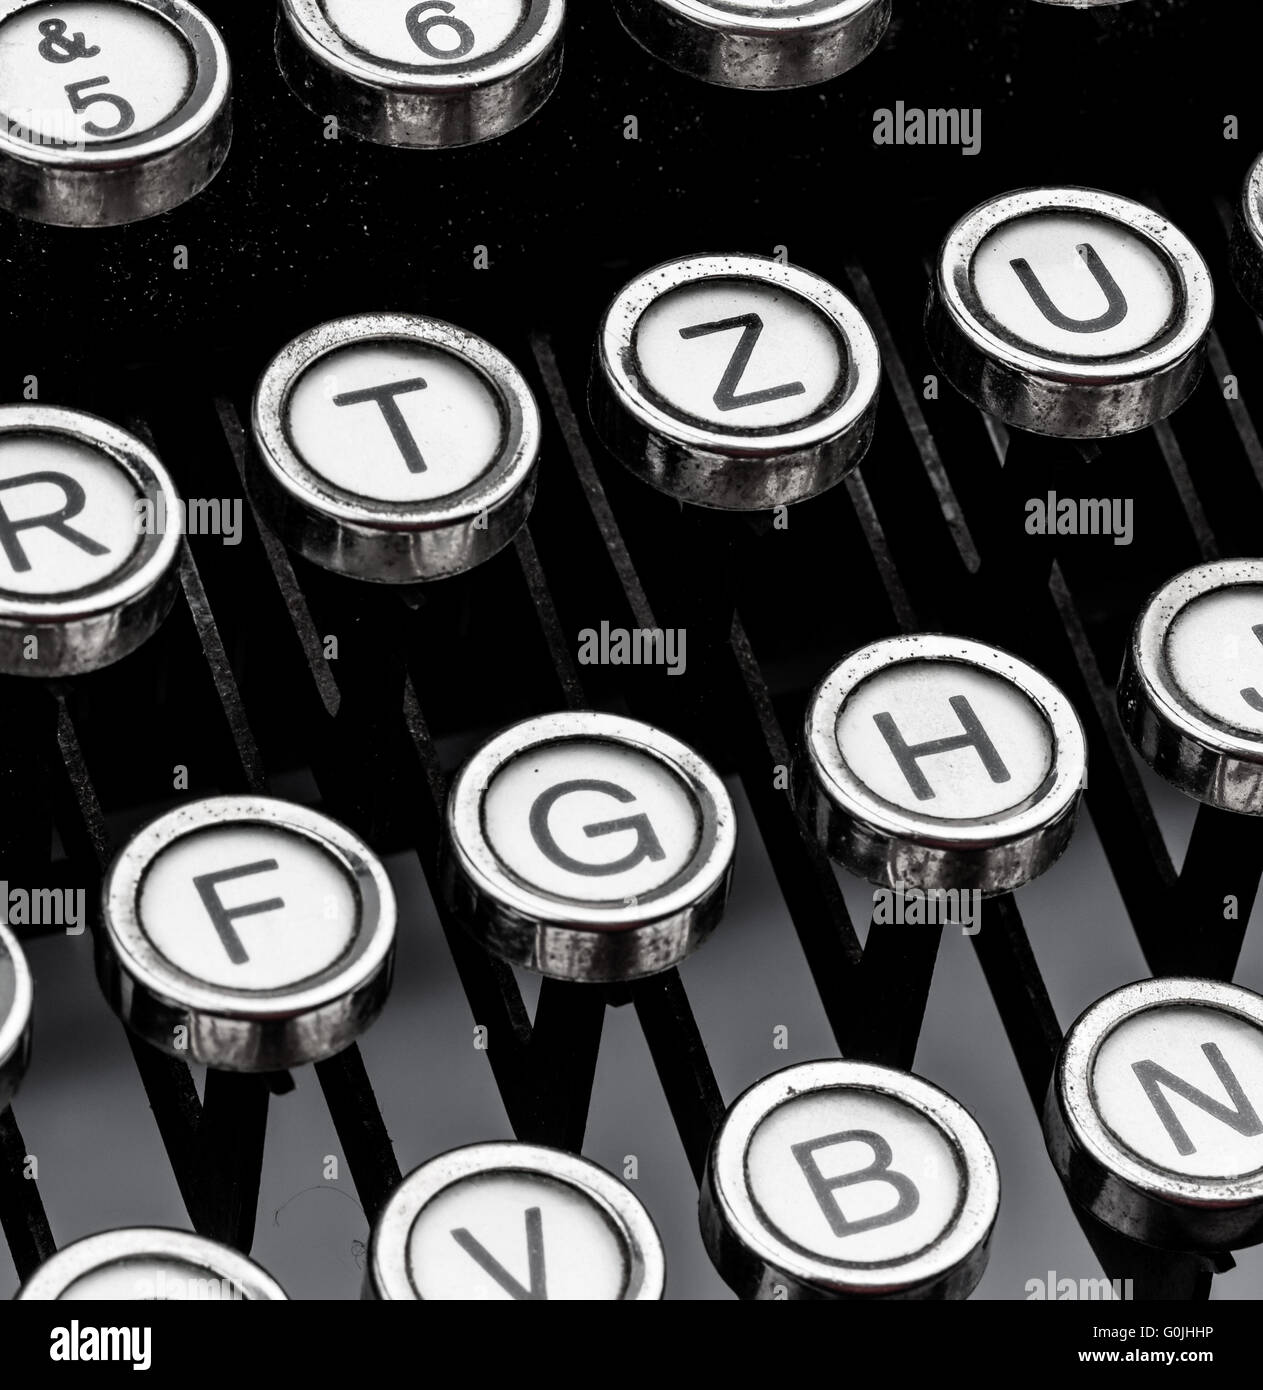 keys on a typewriter Stock Photo